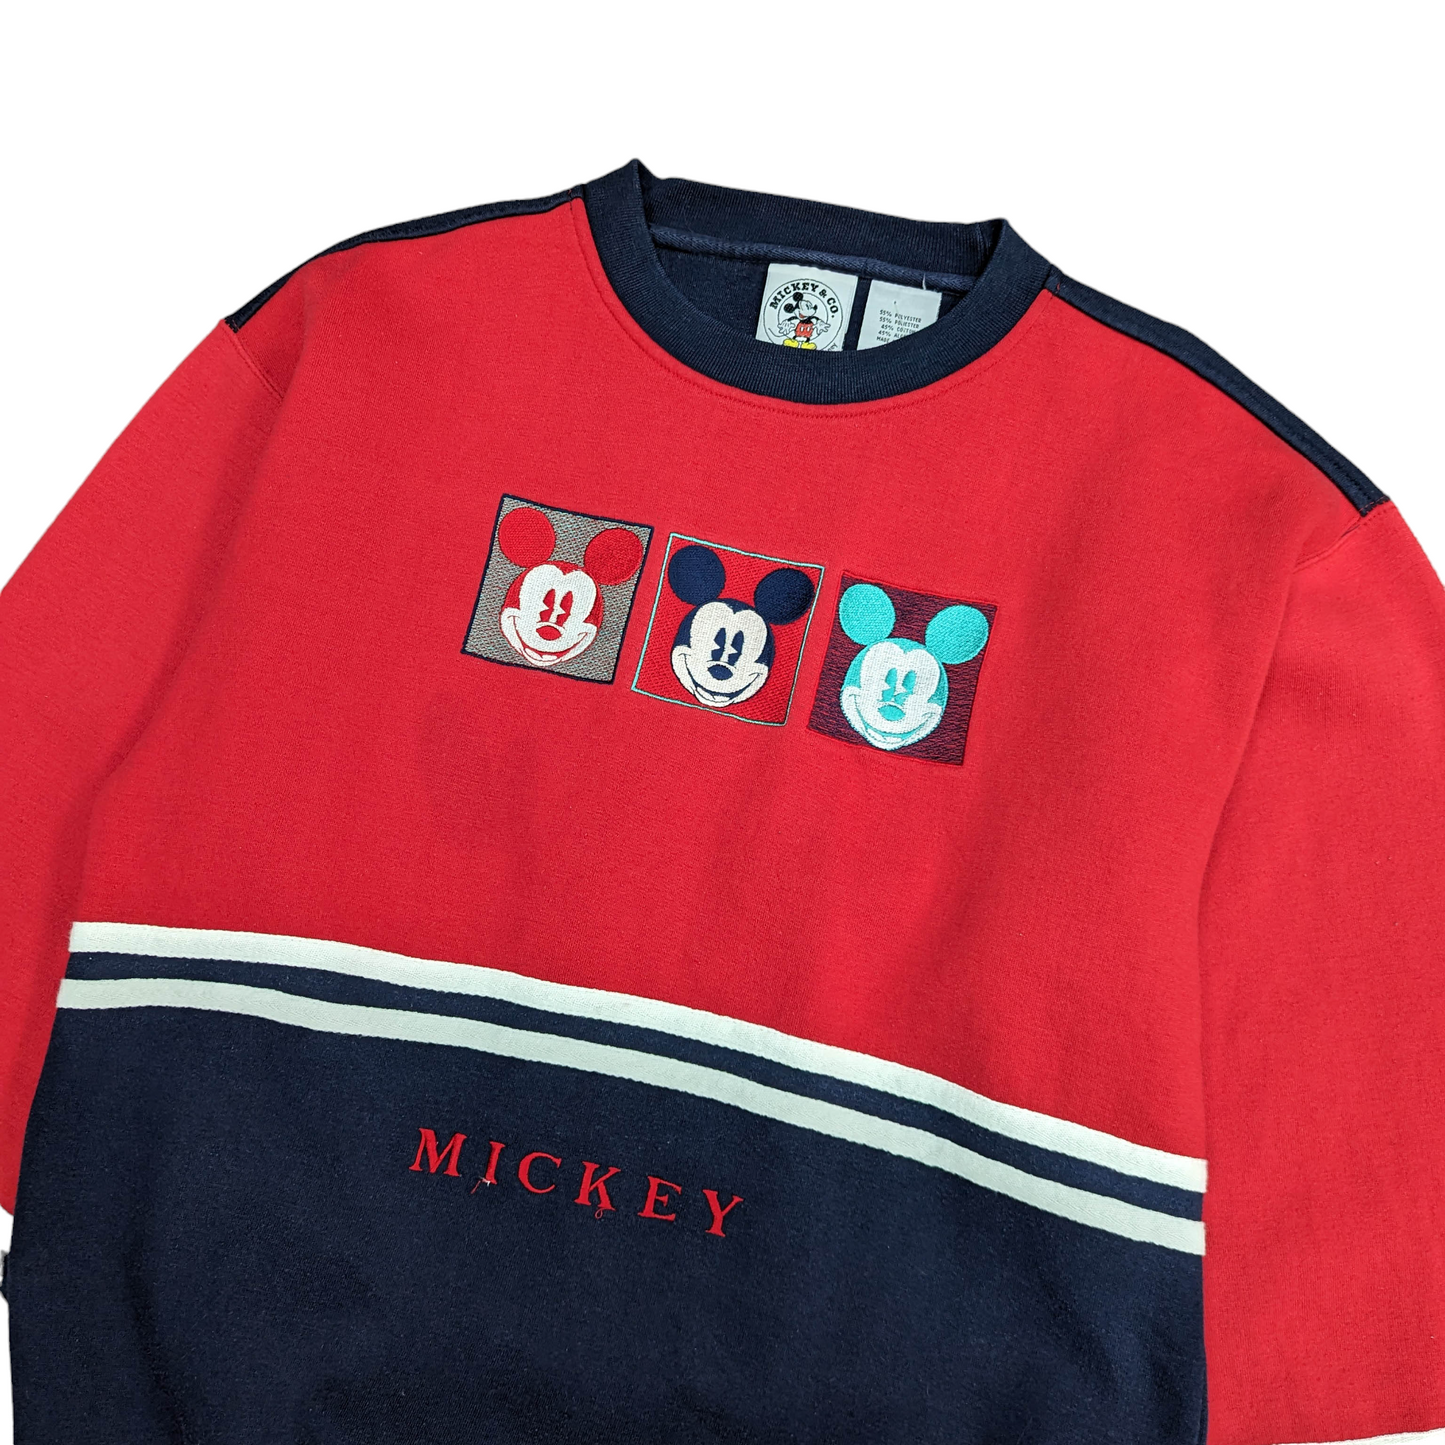 Mickey & Co Sweatshirt Size M